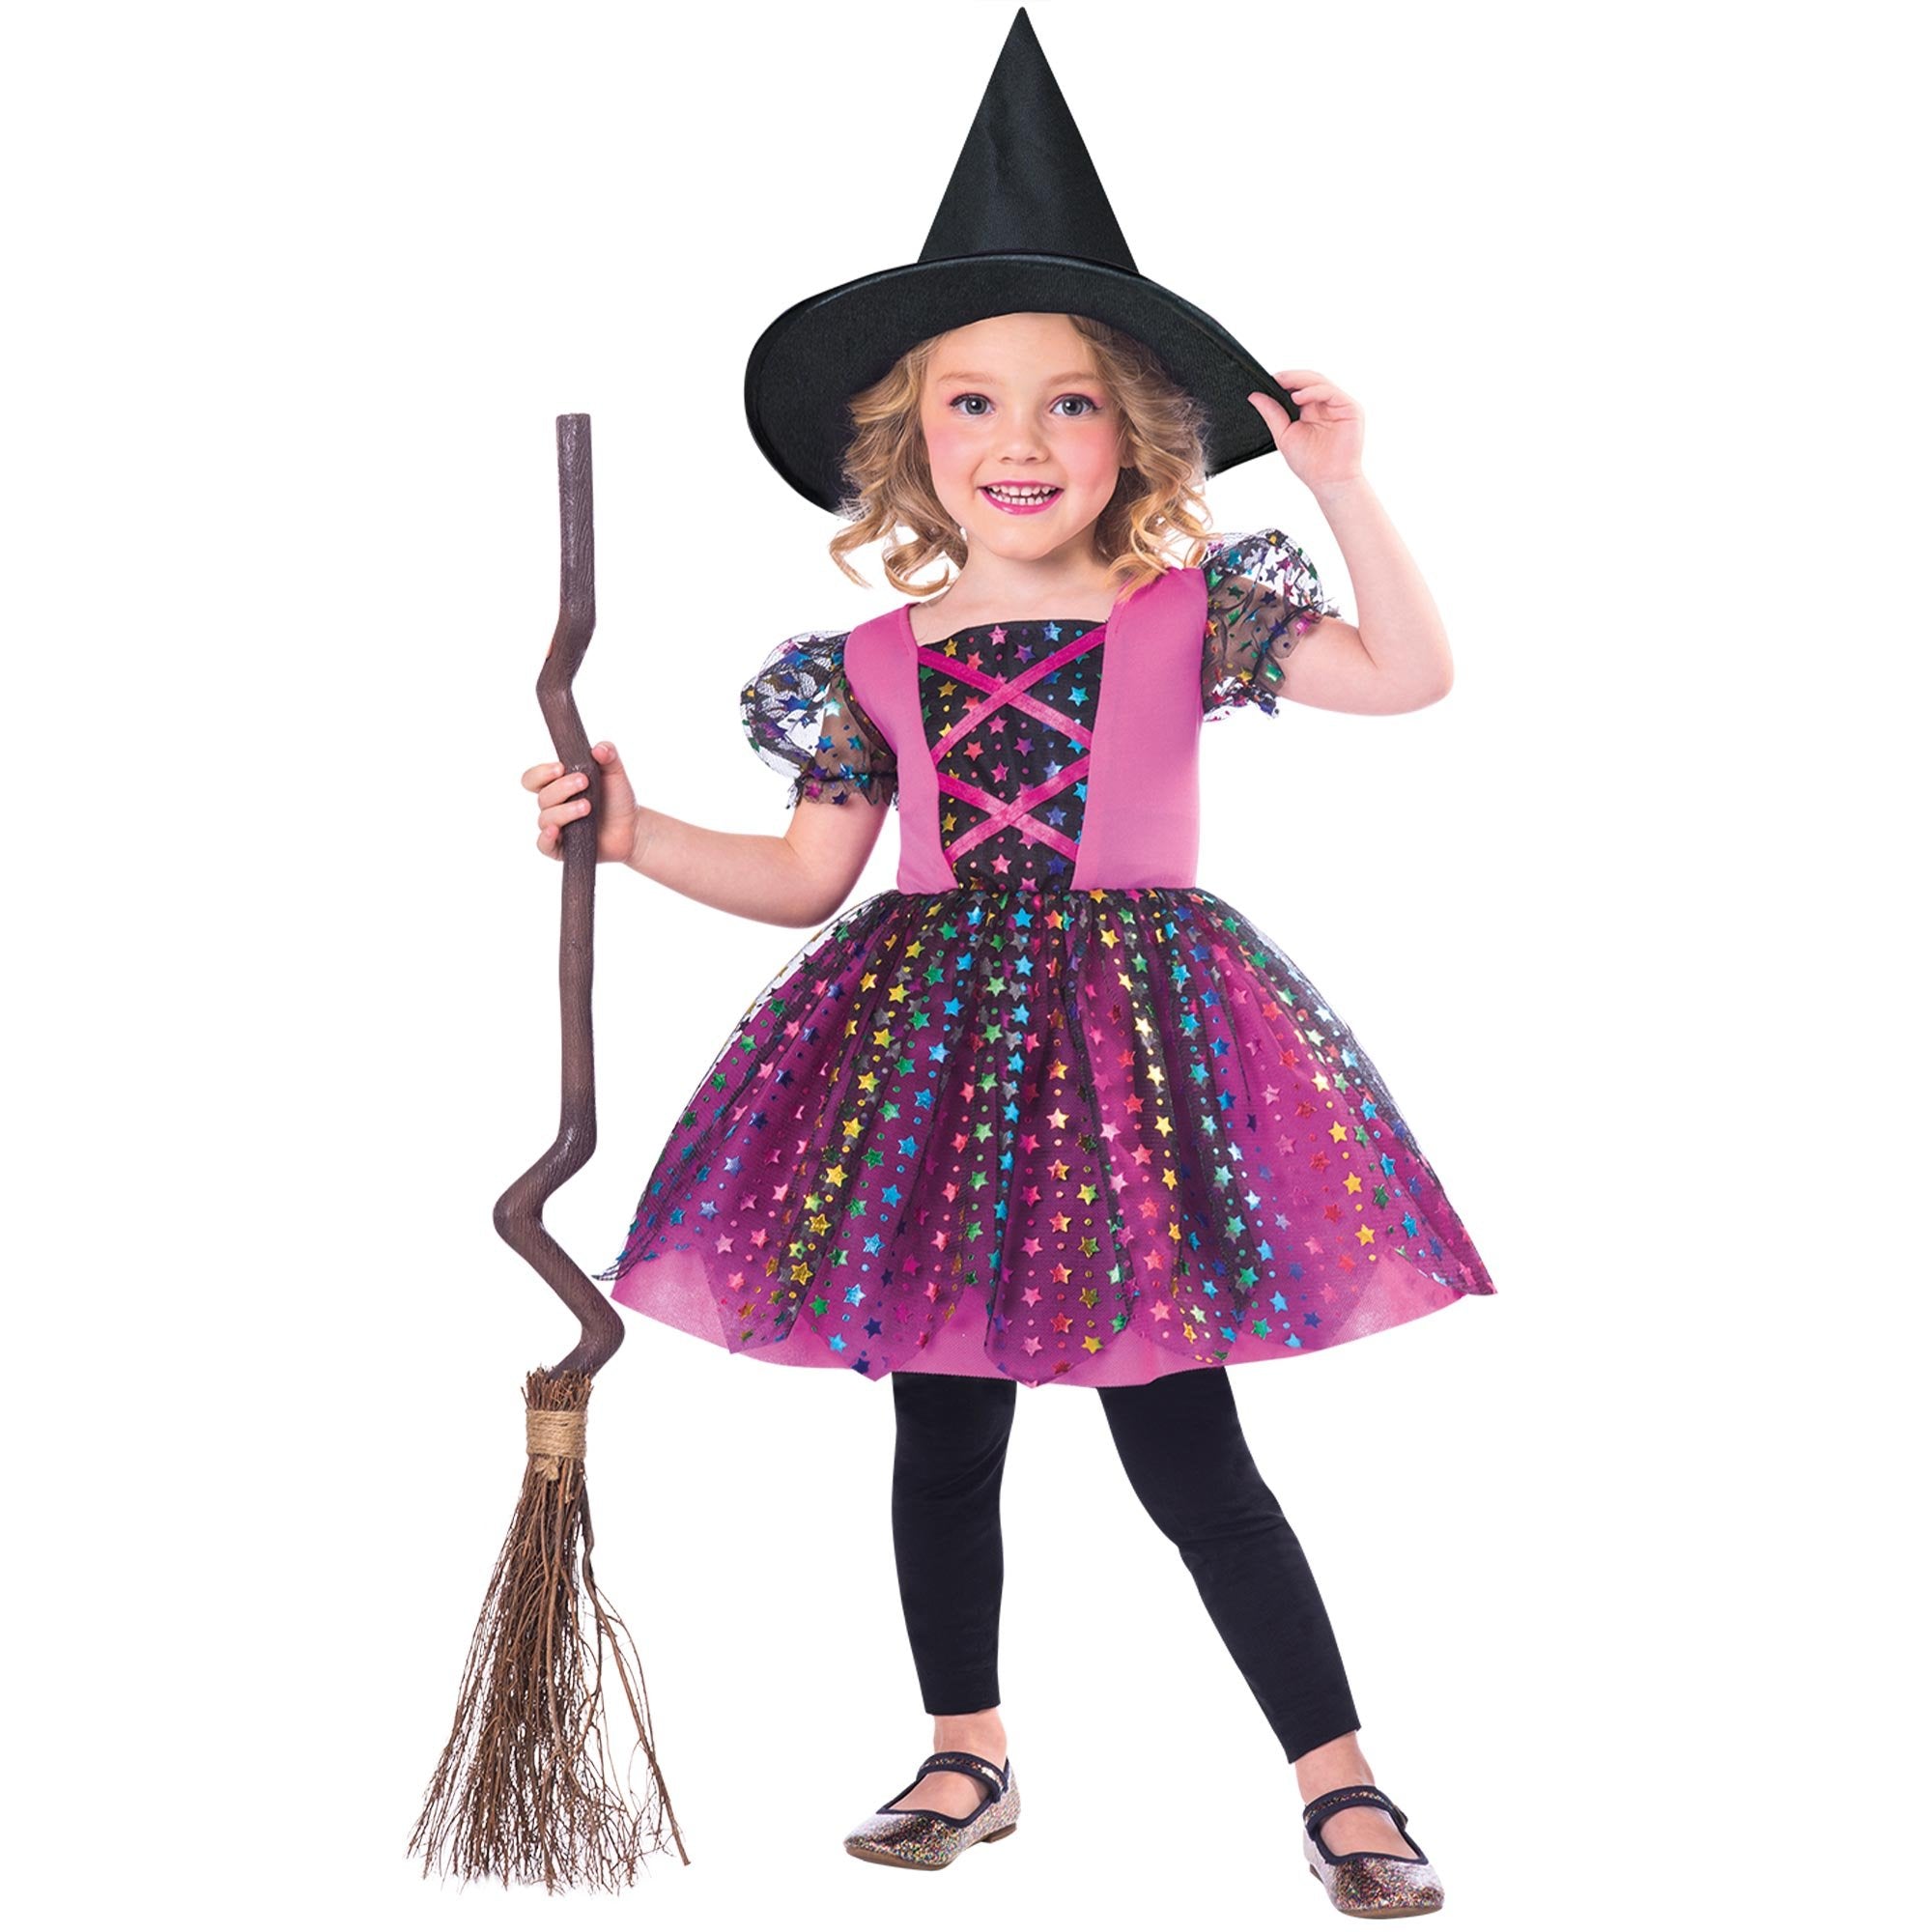 Costume Rainbow Witch - Kids